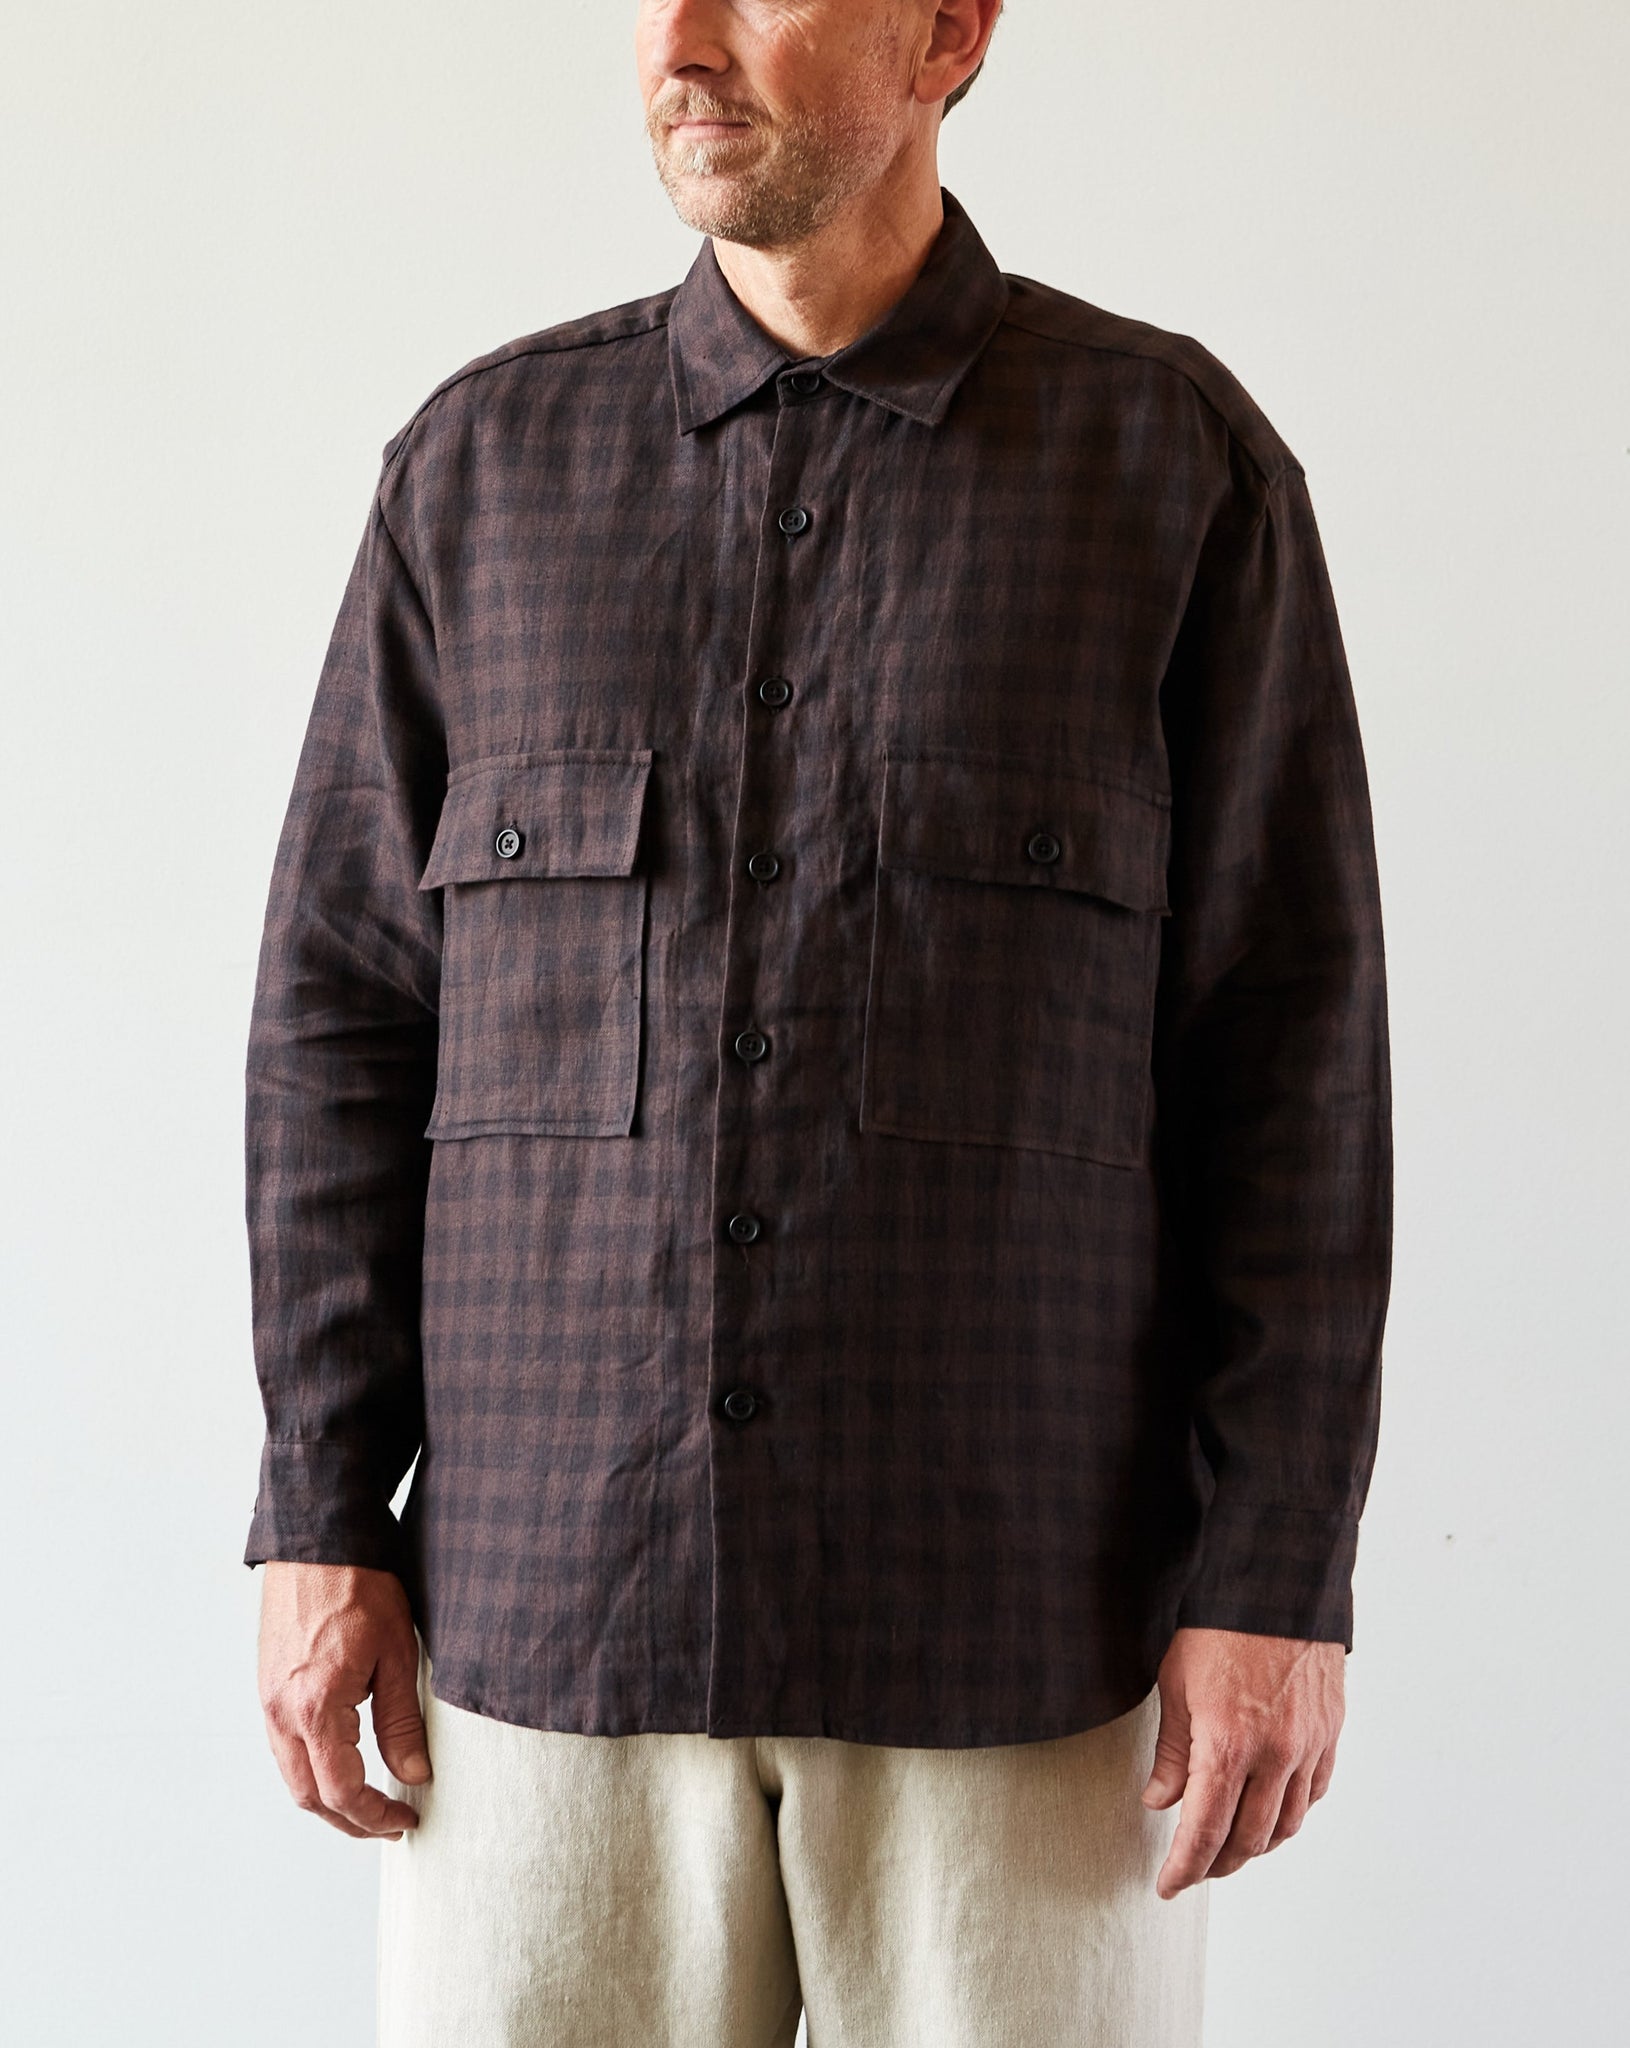 Evan Kinori Big Shirt, Irish Linen Check